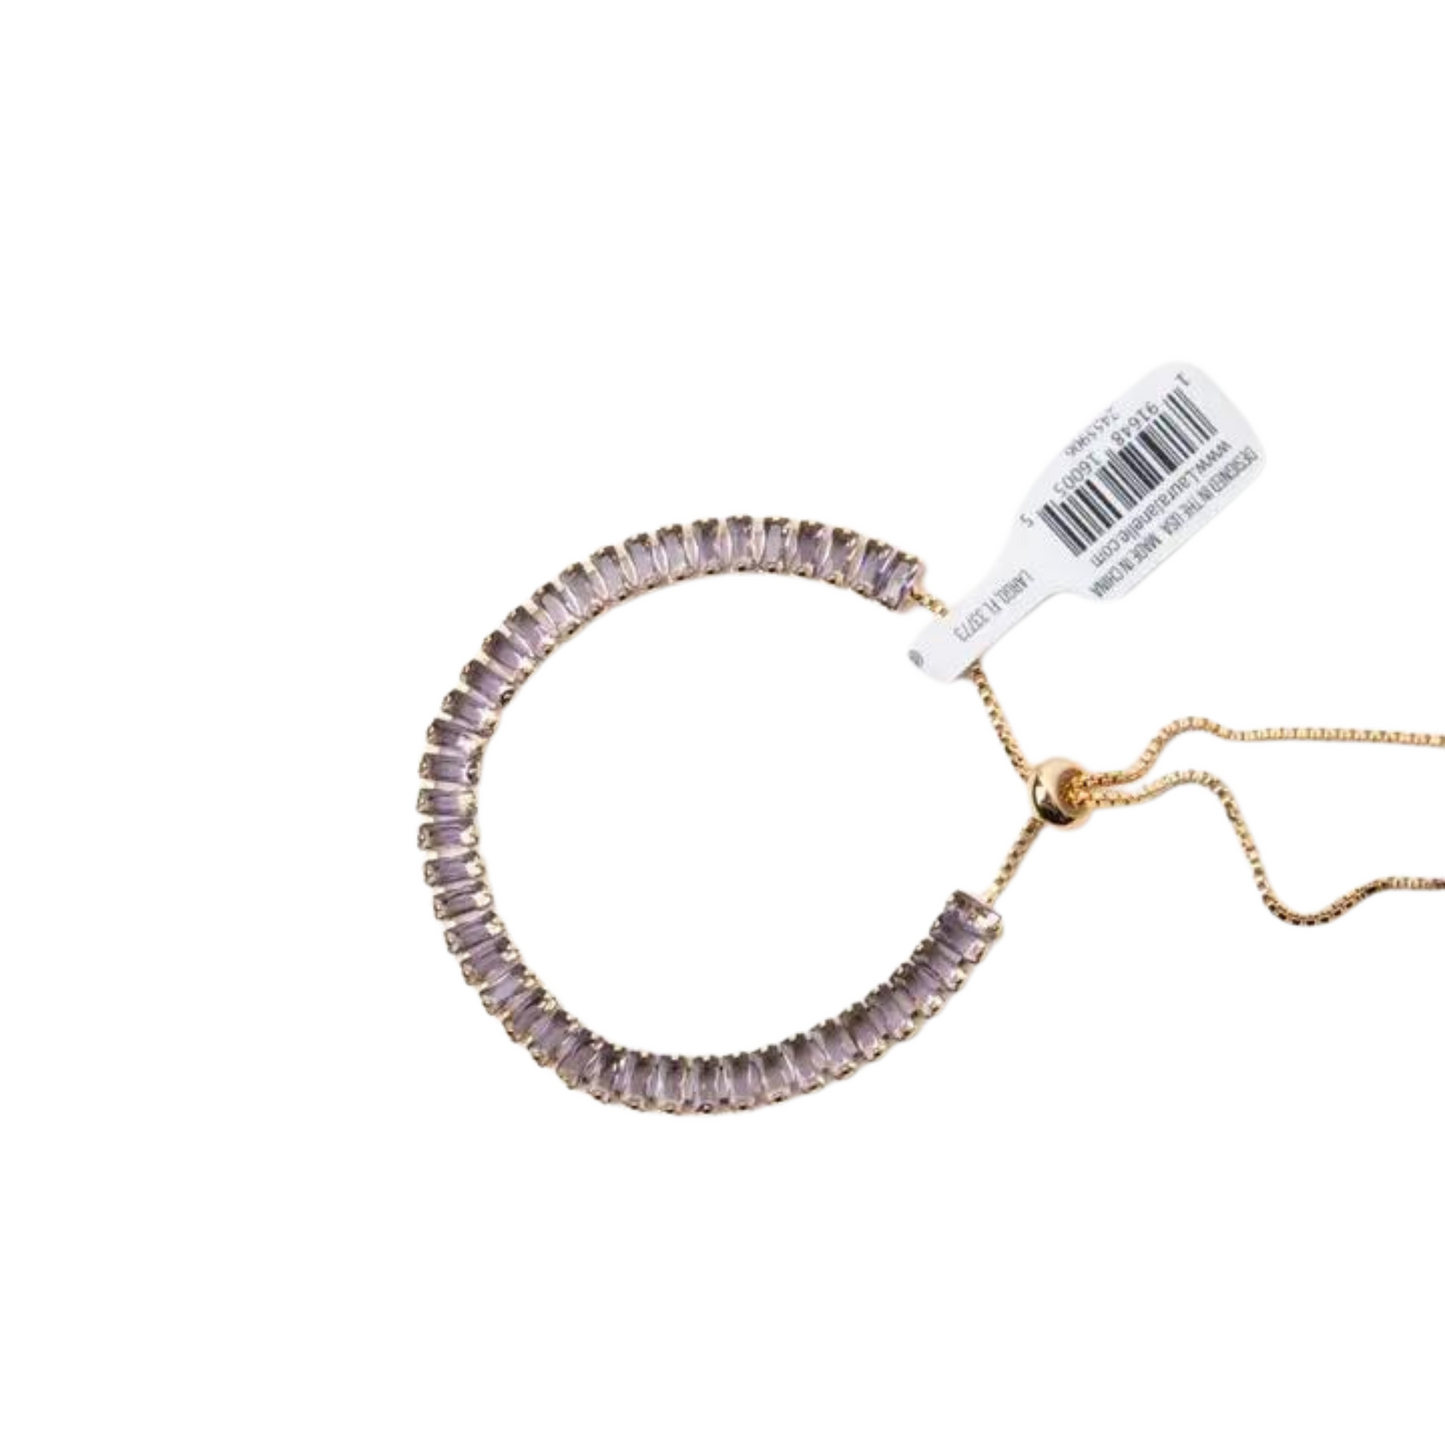 14K gold plated adjustable tennis bracelet in alexandrite